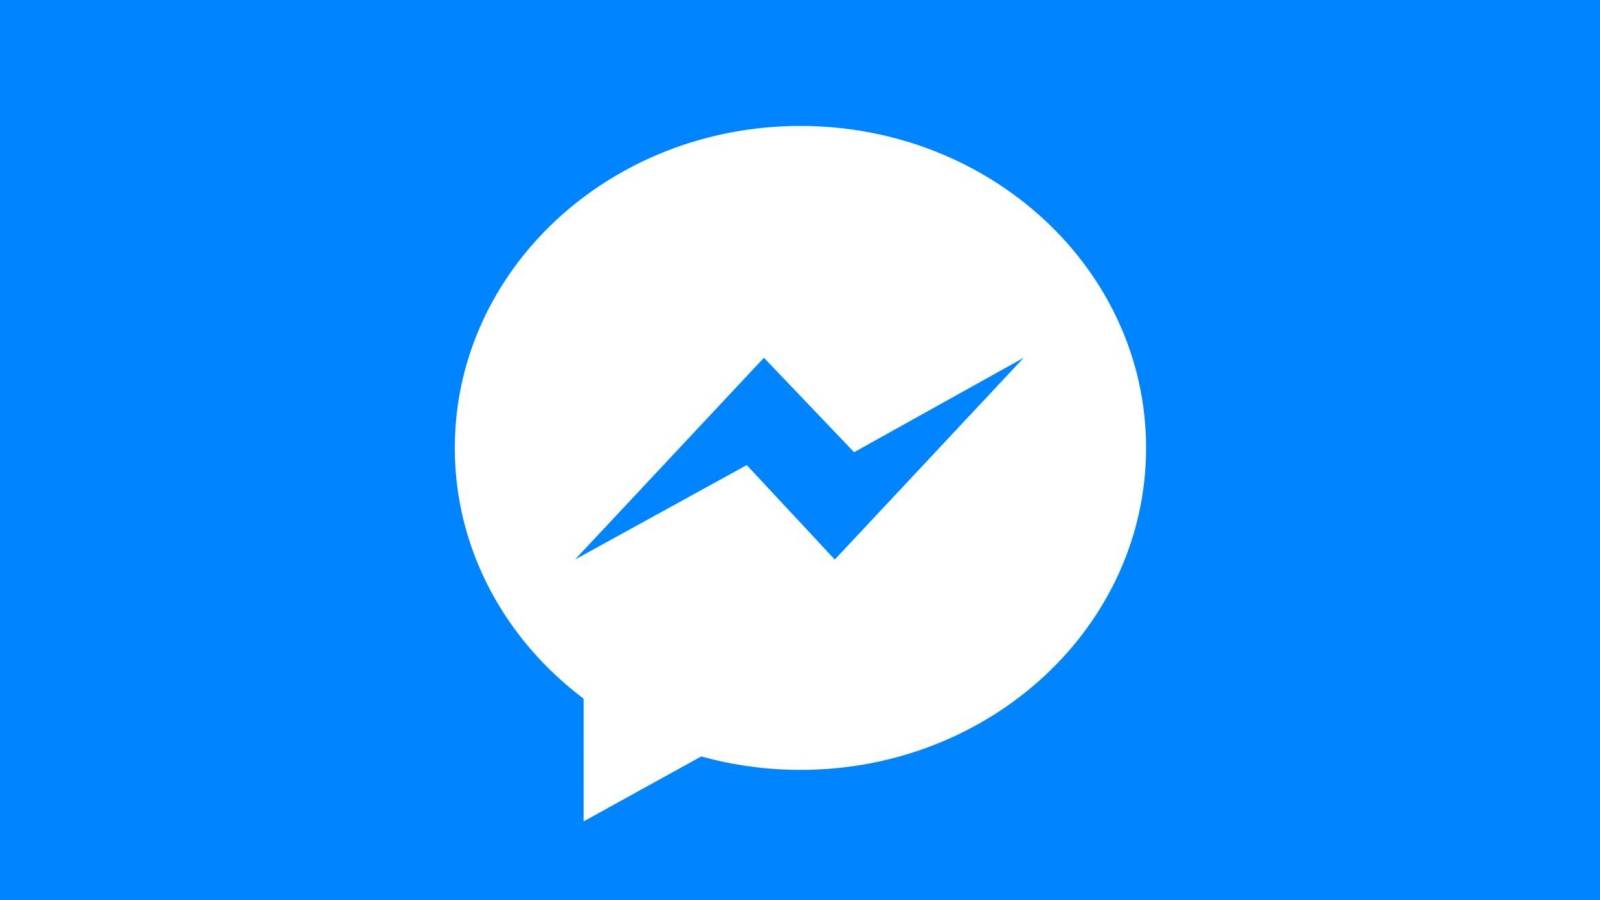 Nowa wersja Facebook Messenger wprowadza zmiany